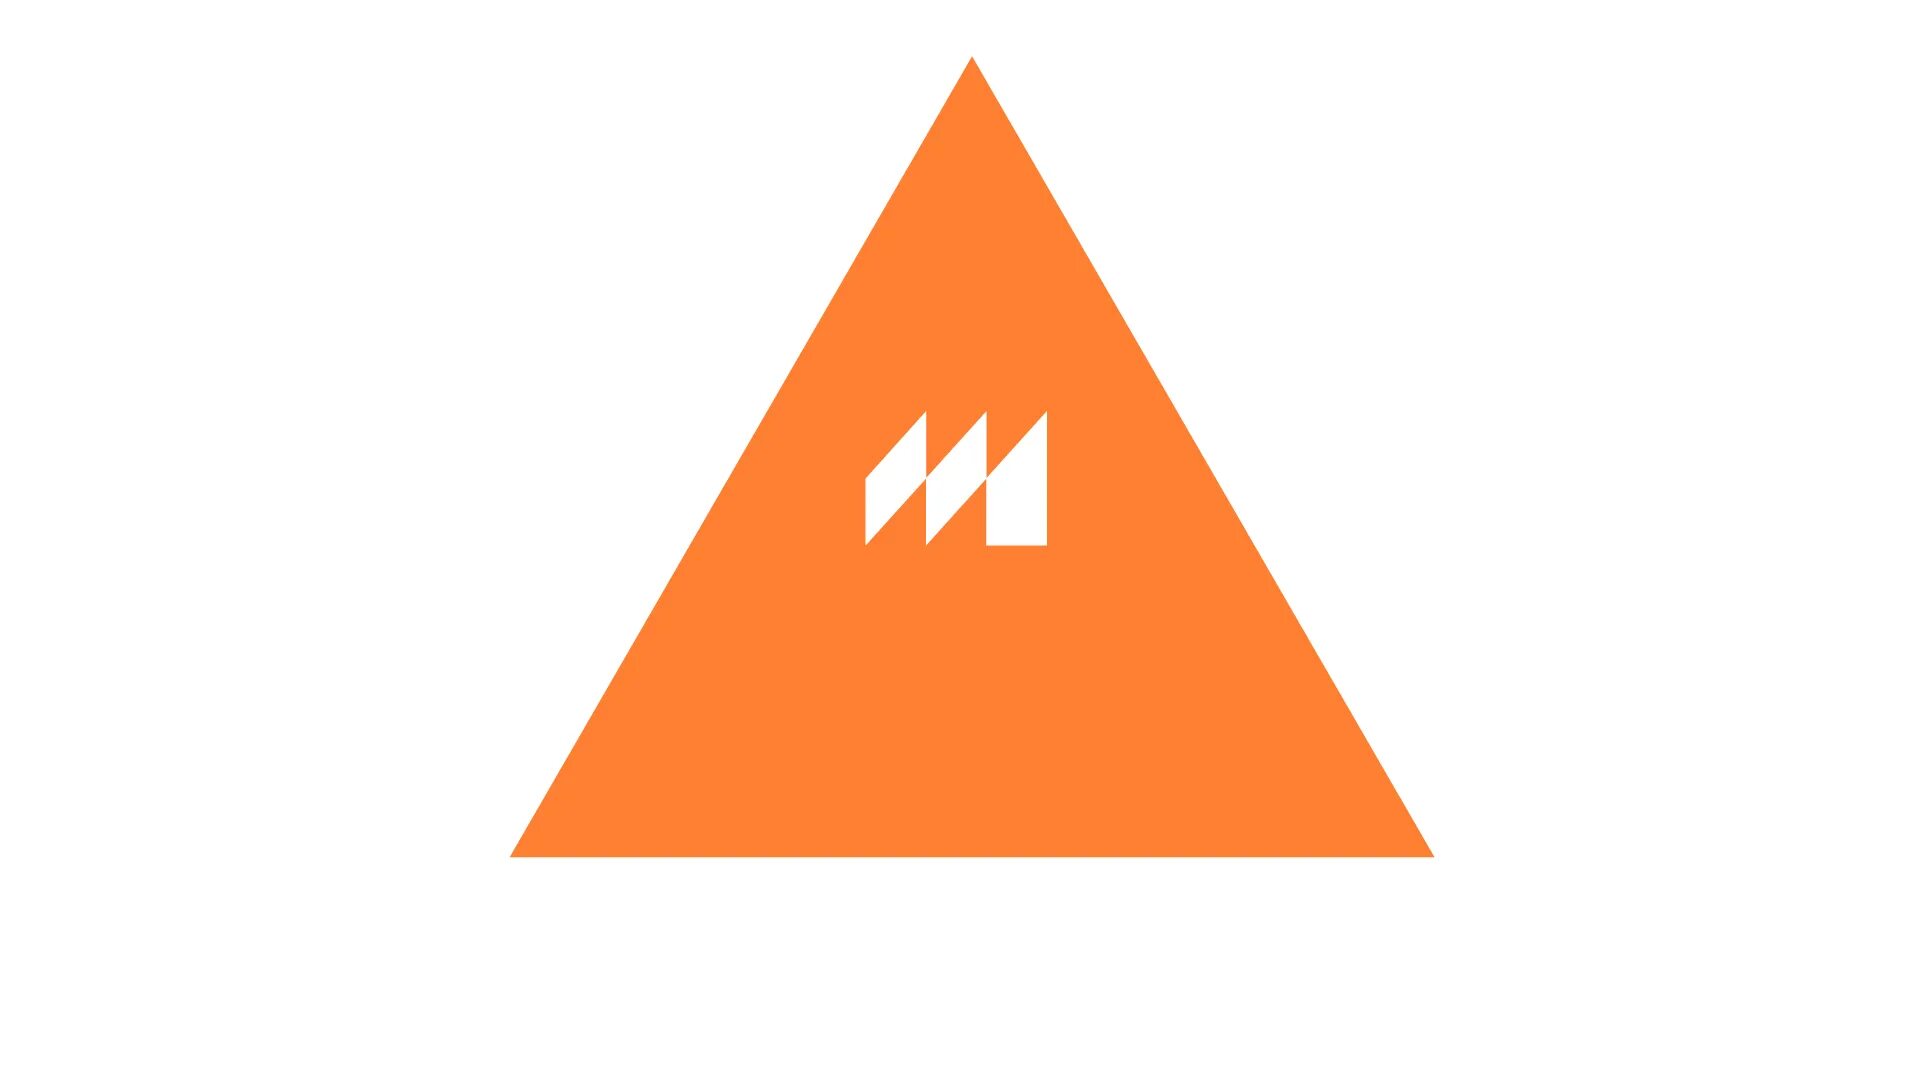 Логотип ютуб в оранжевом цвете на прозрачном фоне.